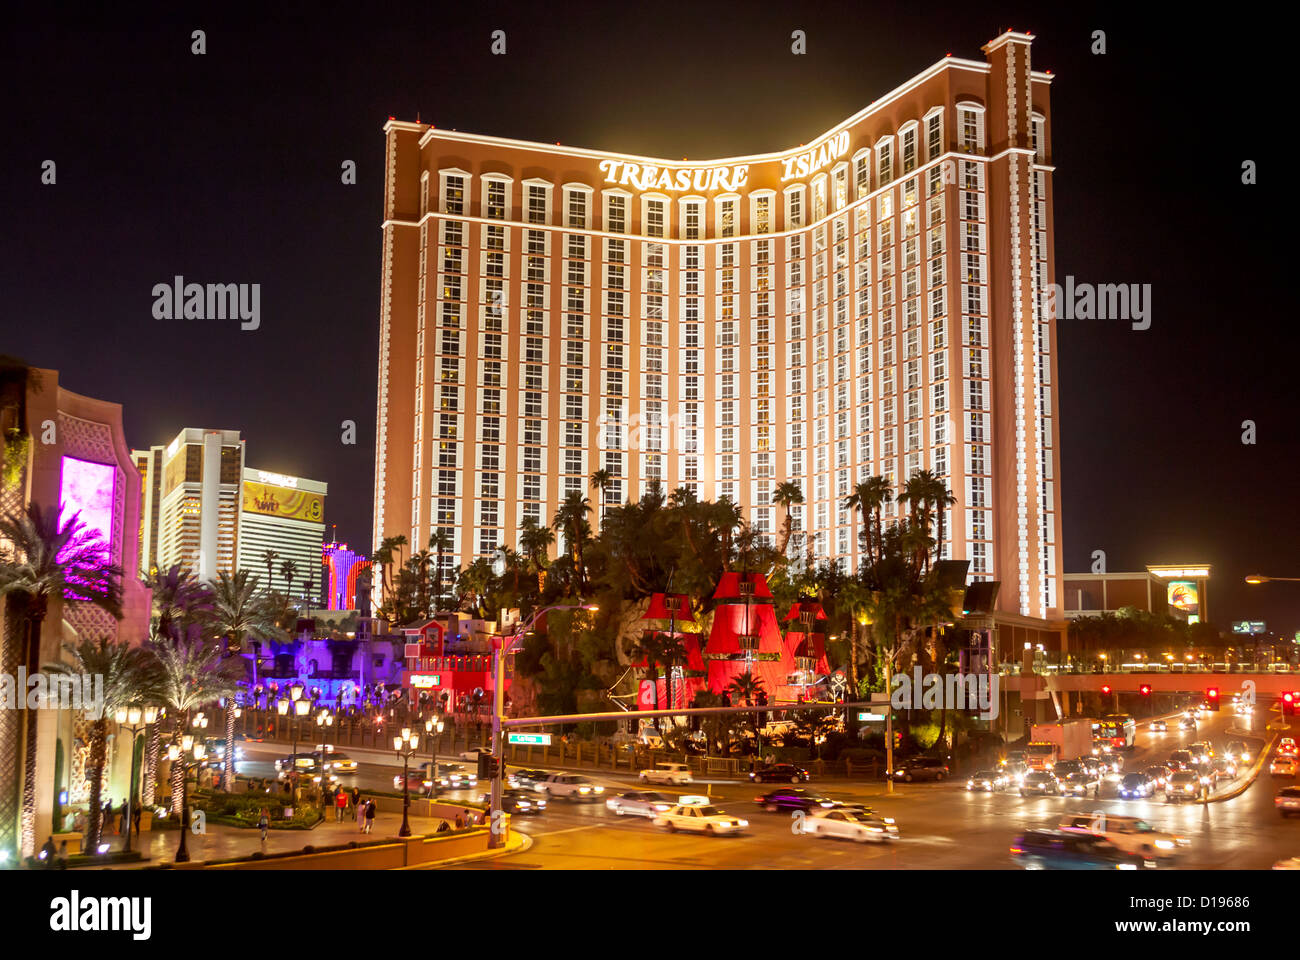 Treasure Island Hotel and Casino at nighttime on Las Vegas Blvd. in Las Vegas, Nevada. Stock Photo